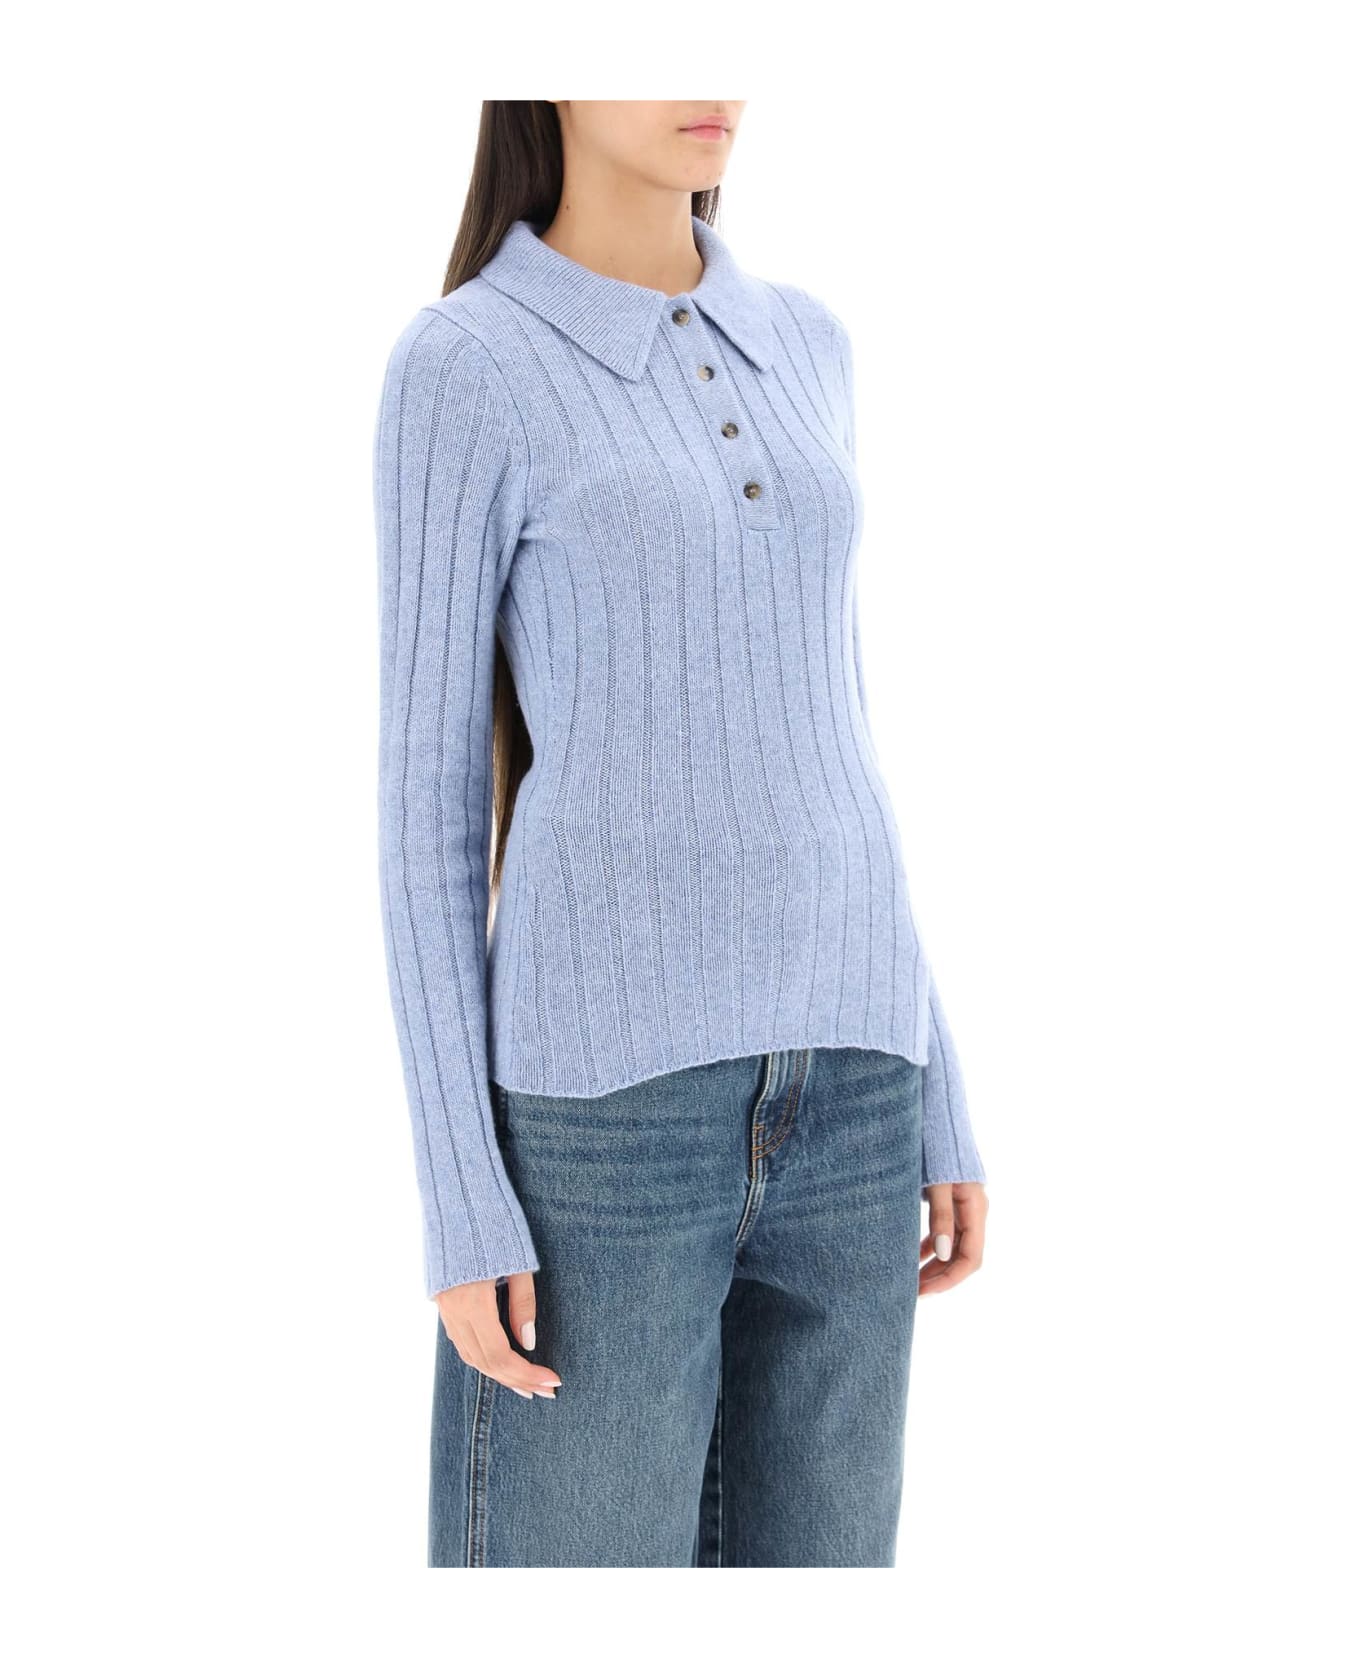 Khaite 'hans' Cashmere deep Polo Sweater - POLAR (Light blue)